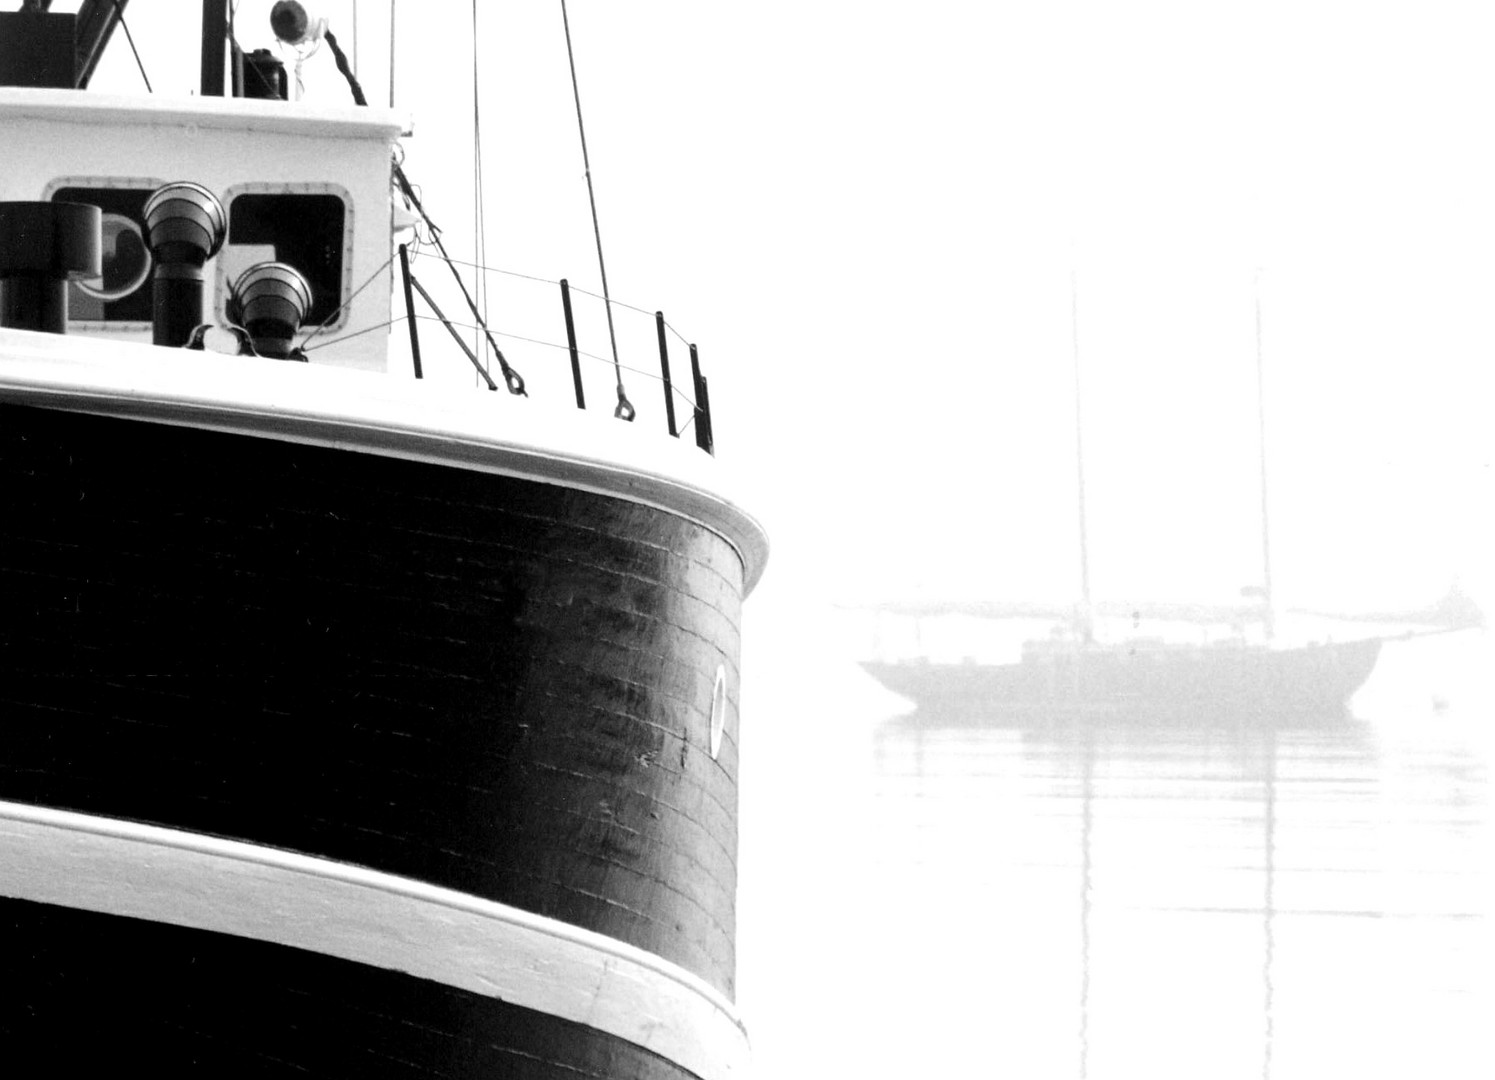 Boat in the Mist